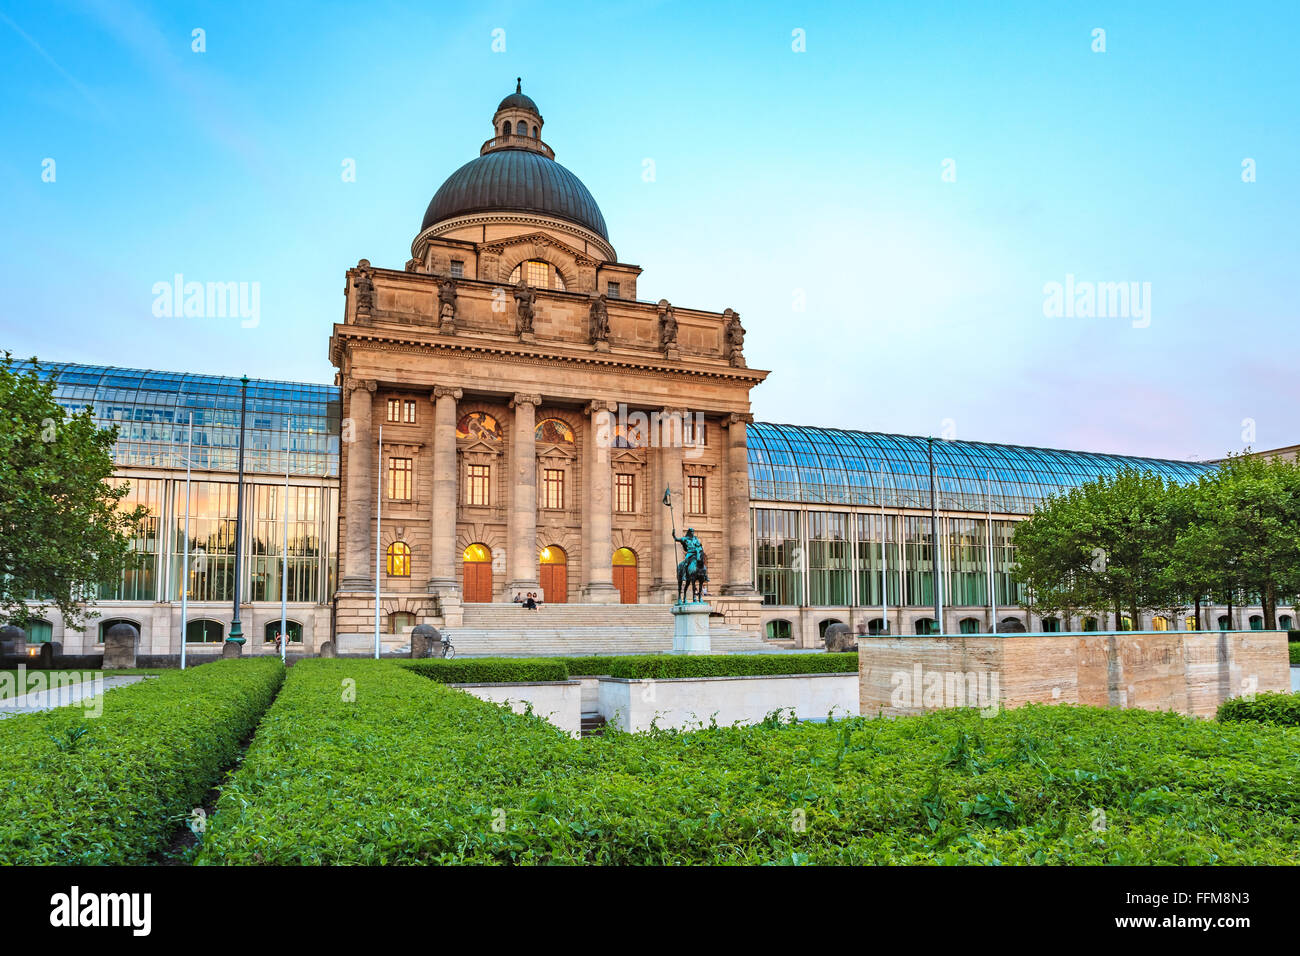 Bavaria State building - Munich - Germany Stock Photo